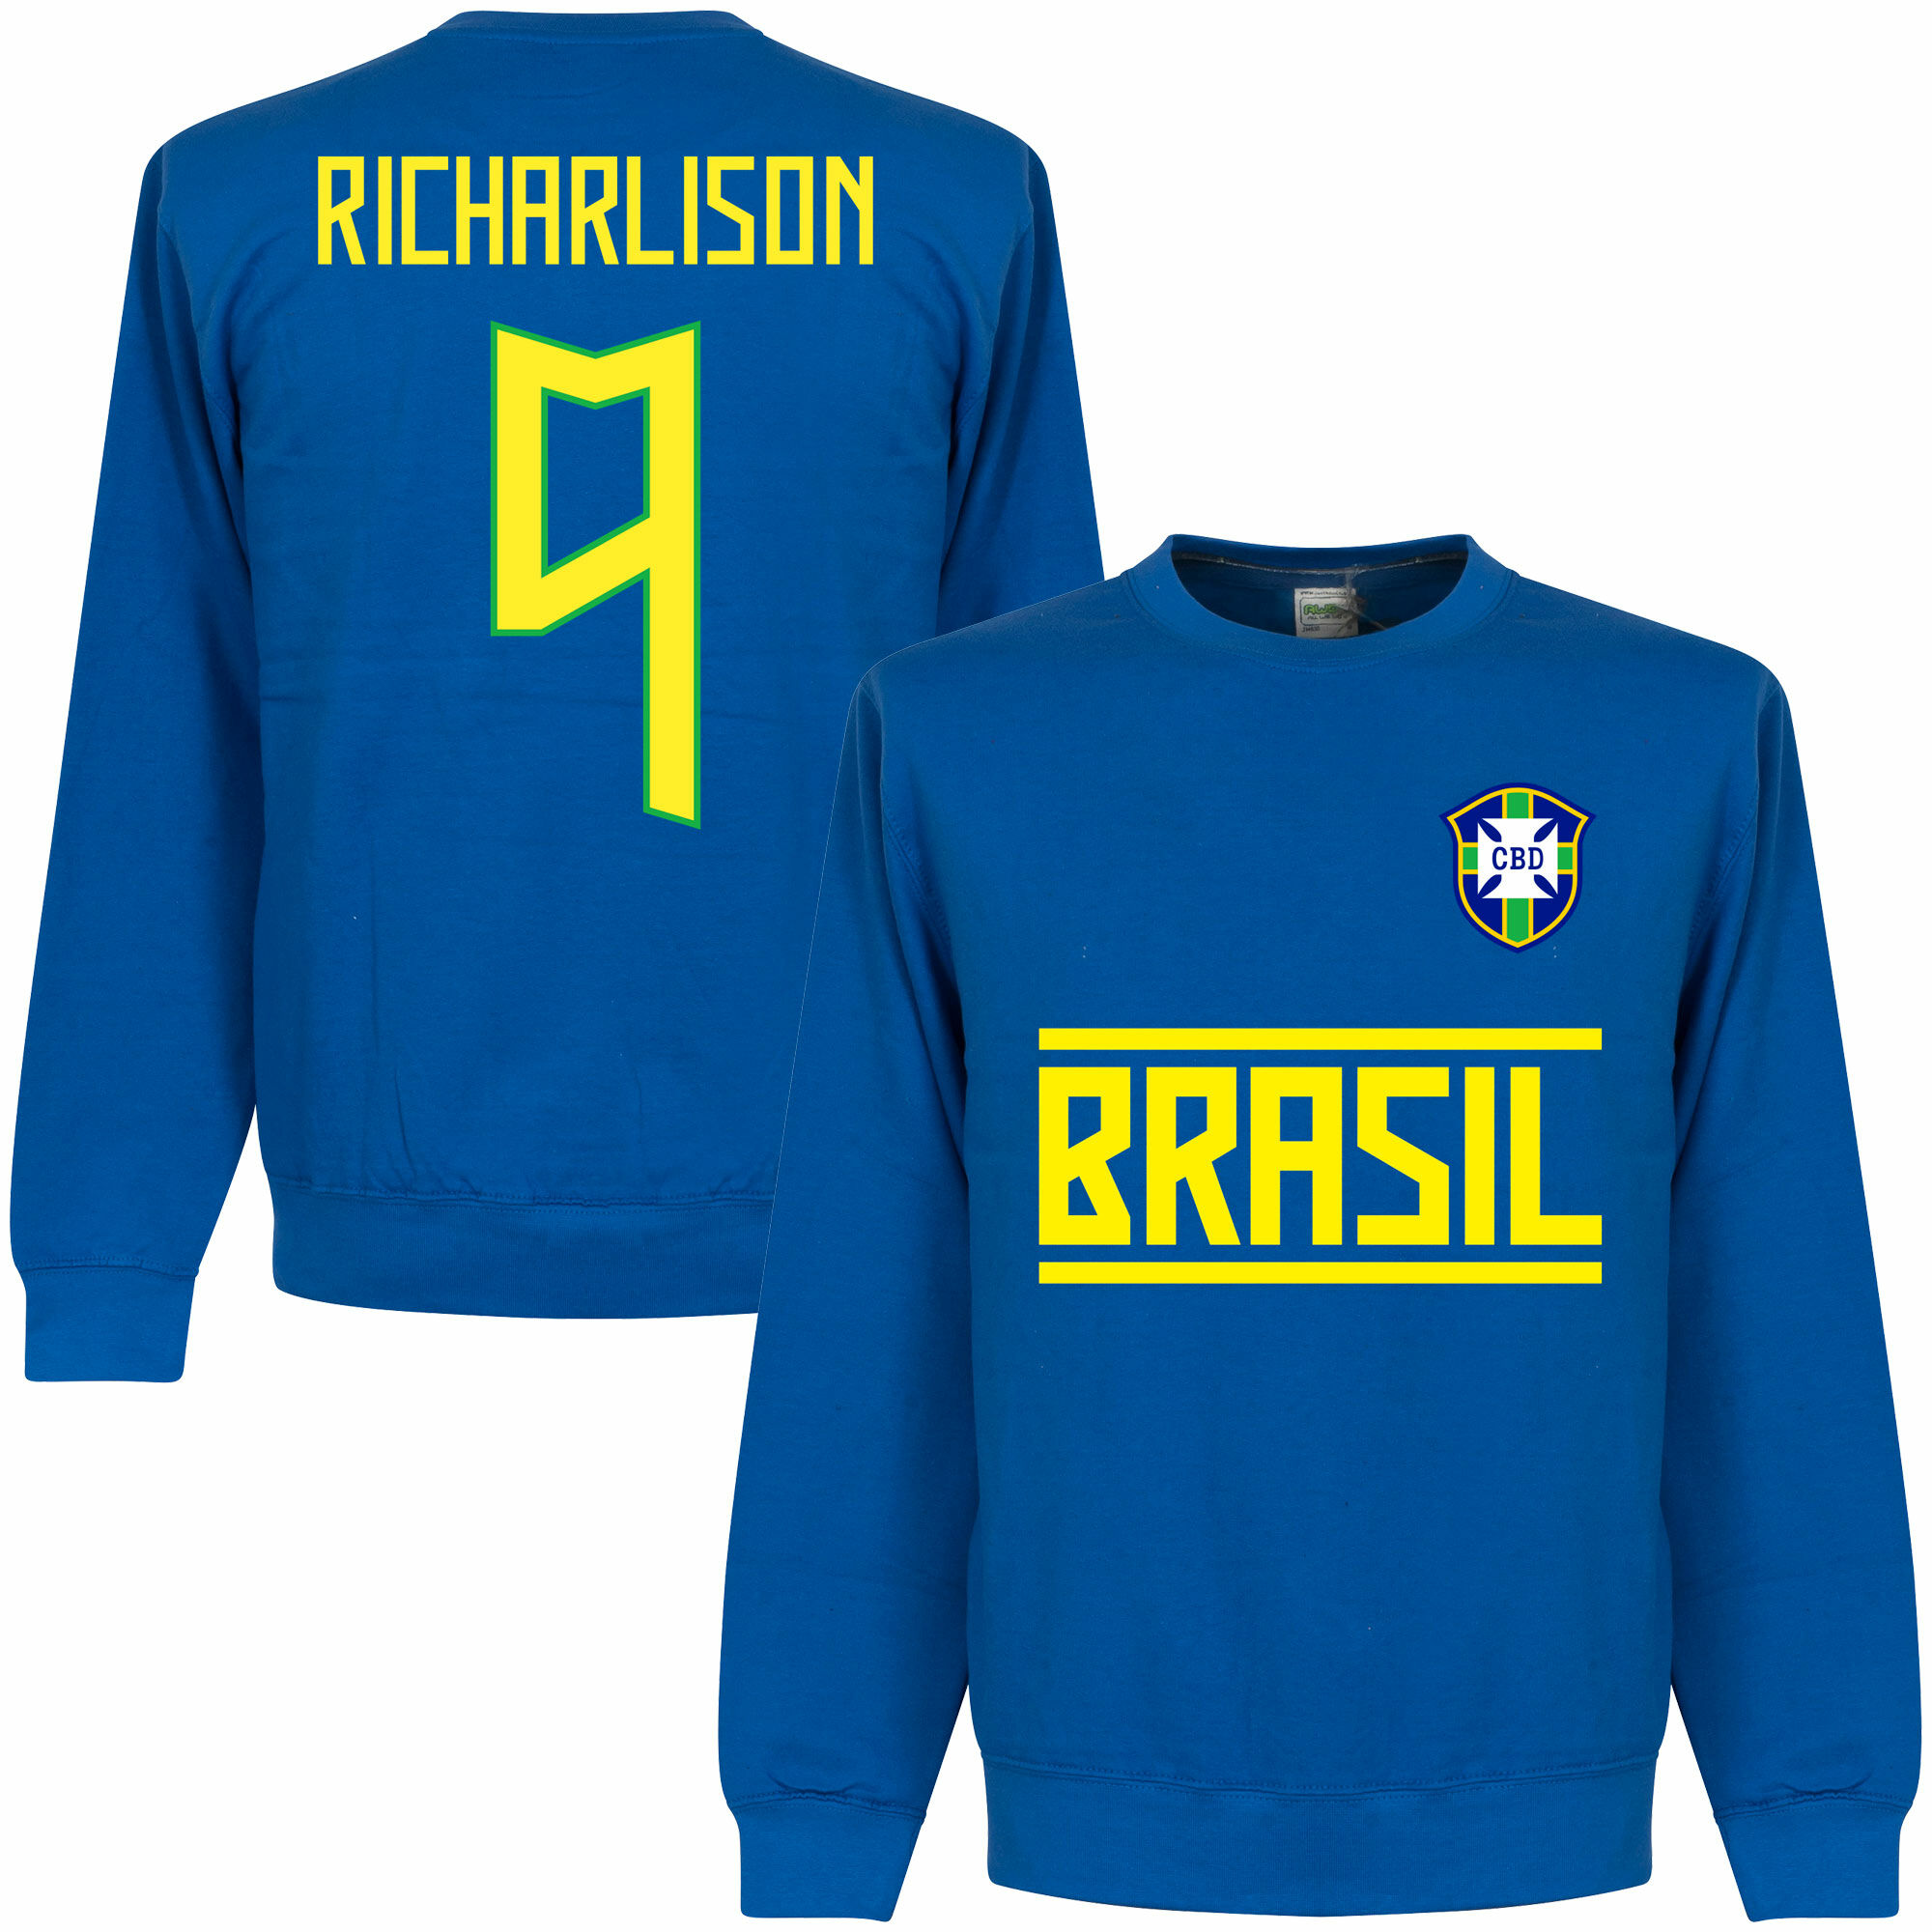 Brazílie - Mikina - Richarlison, modrá, číslo 9